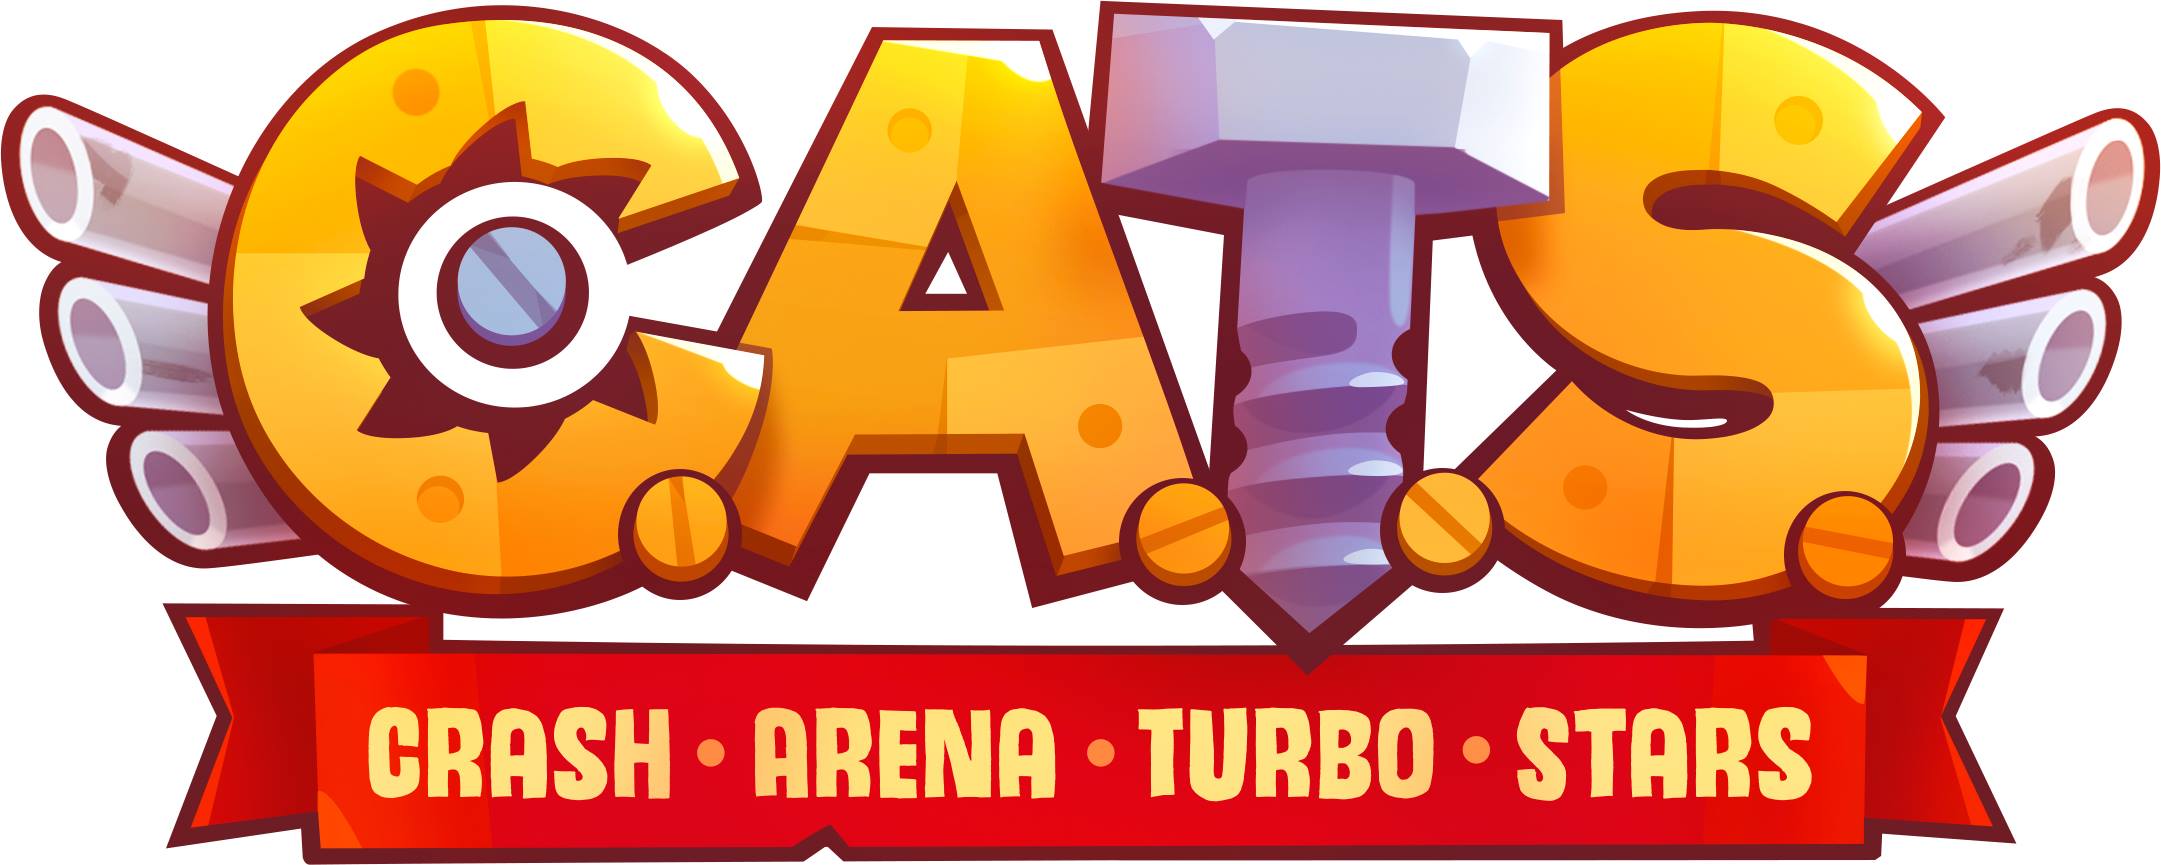 cats crash arena turbo stars similar games